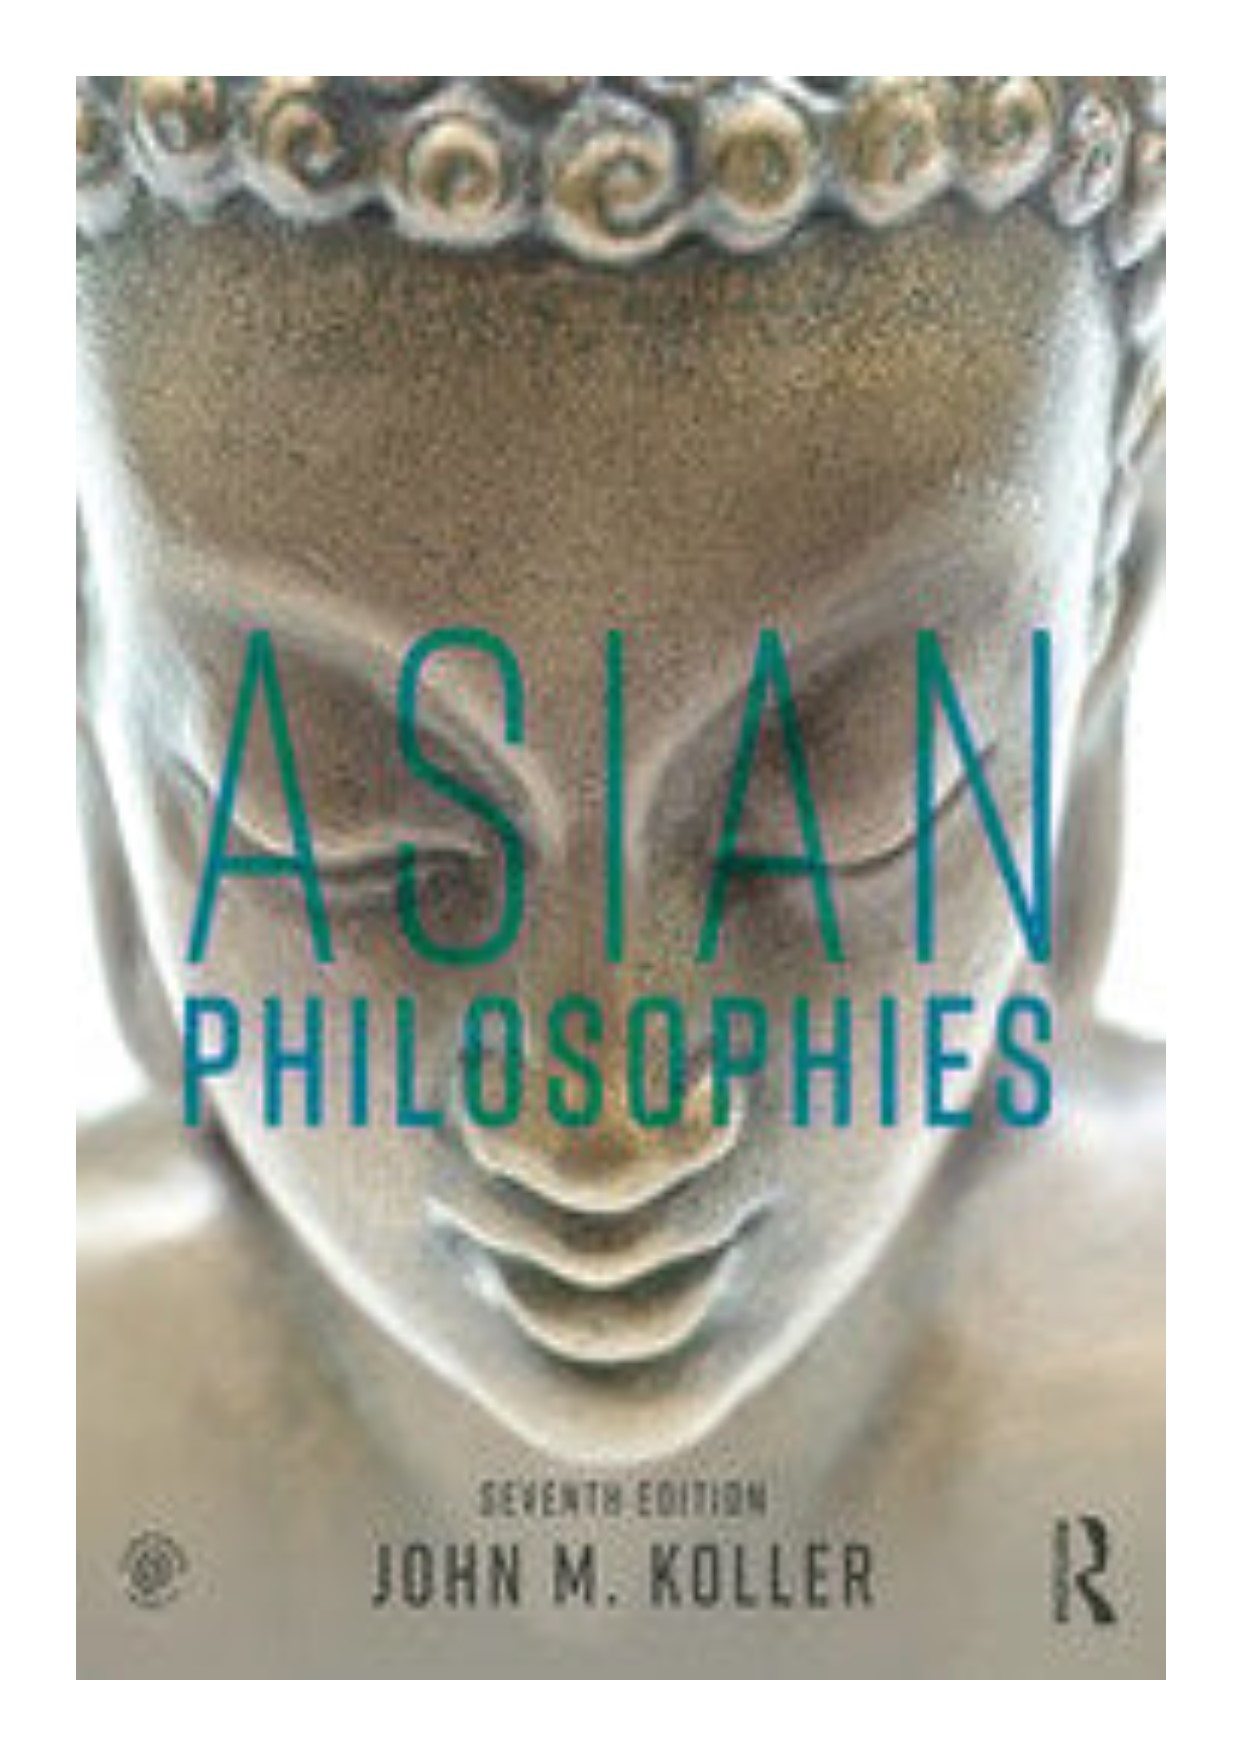 Asian philosophies